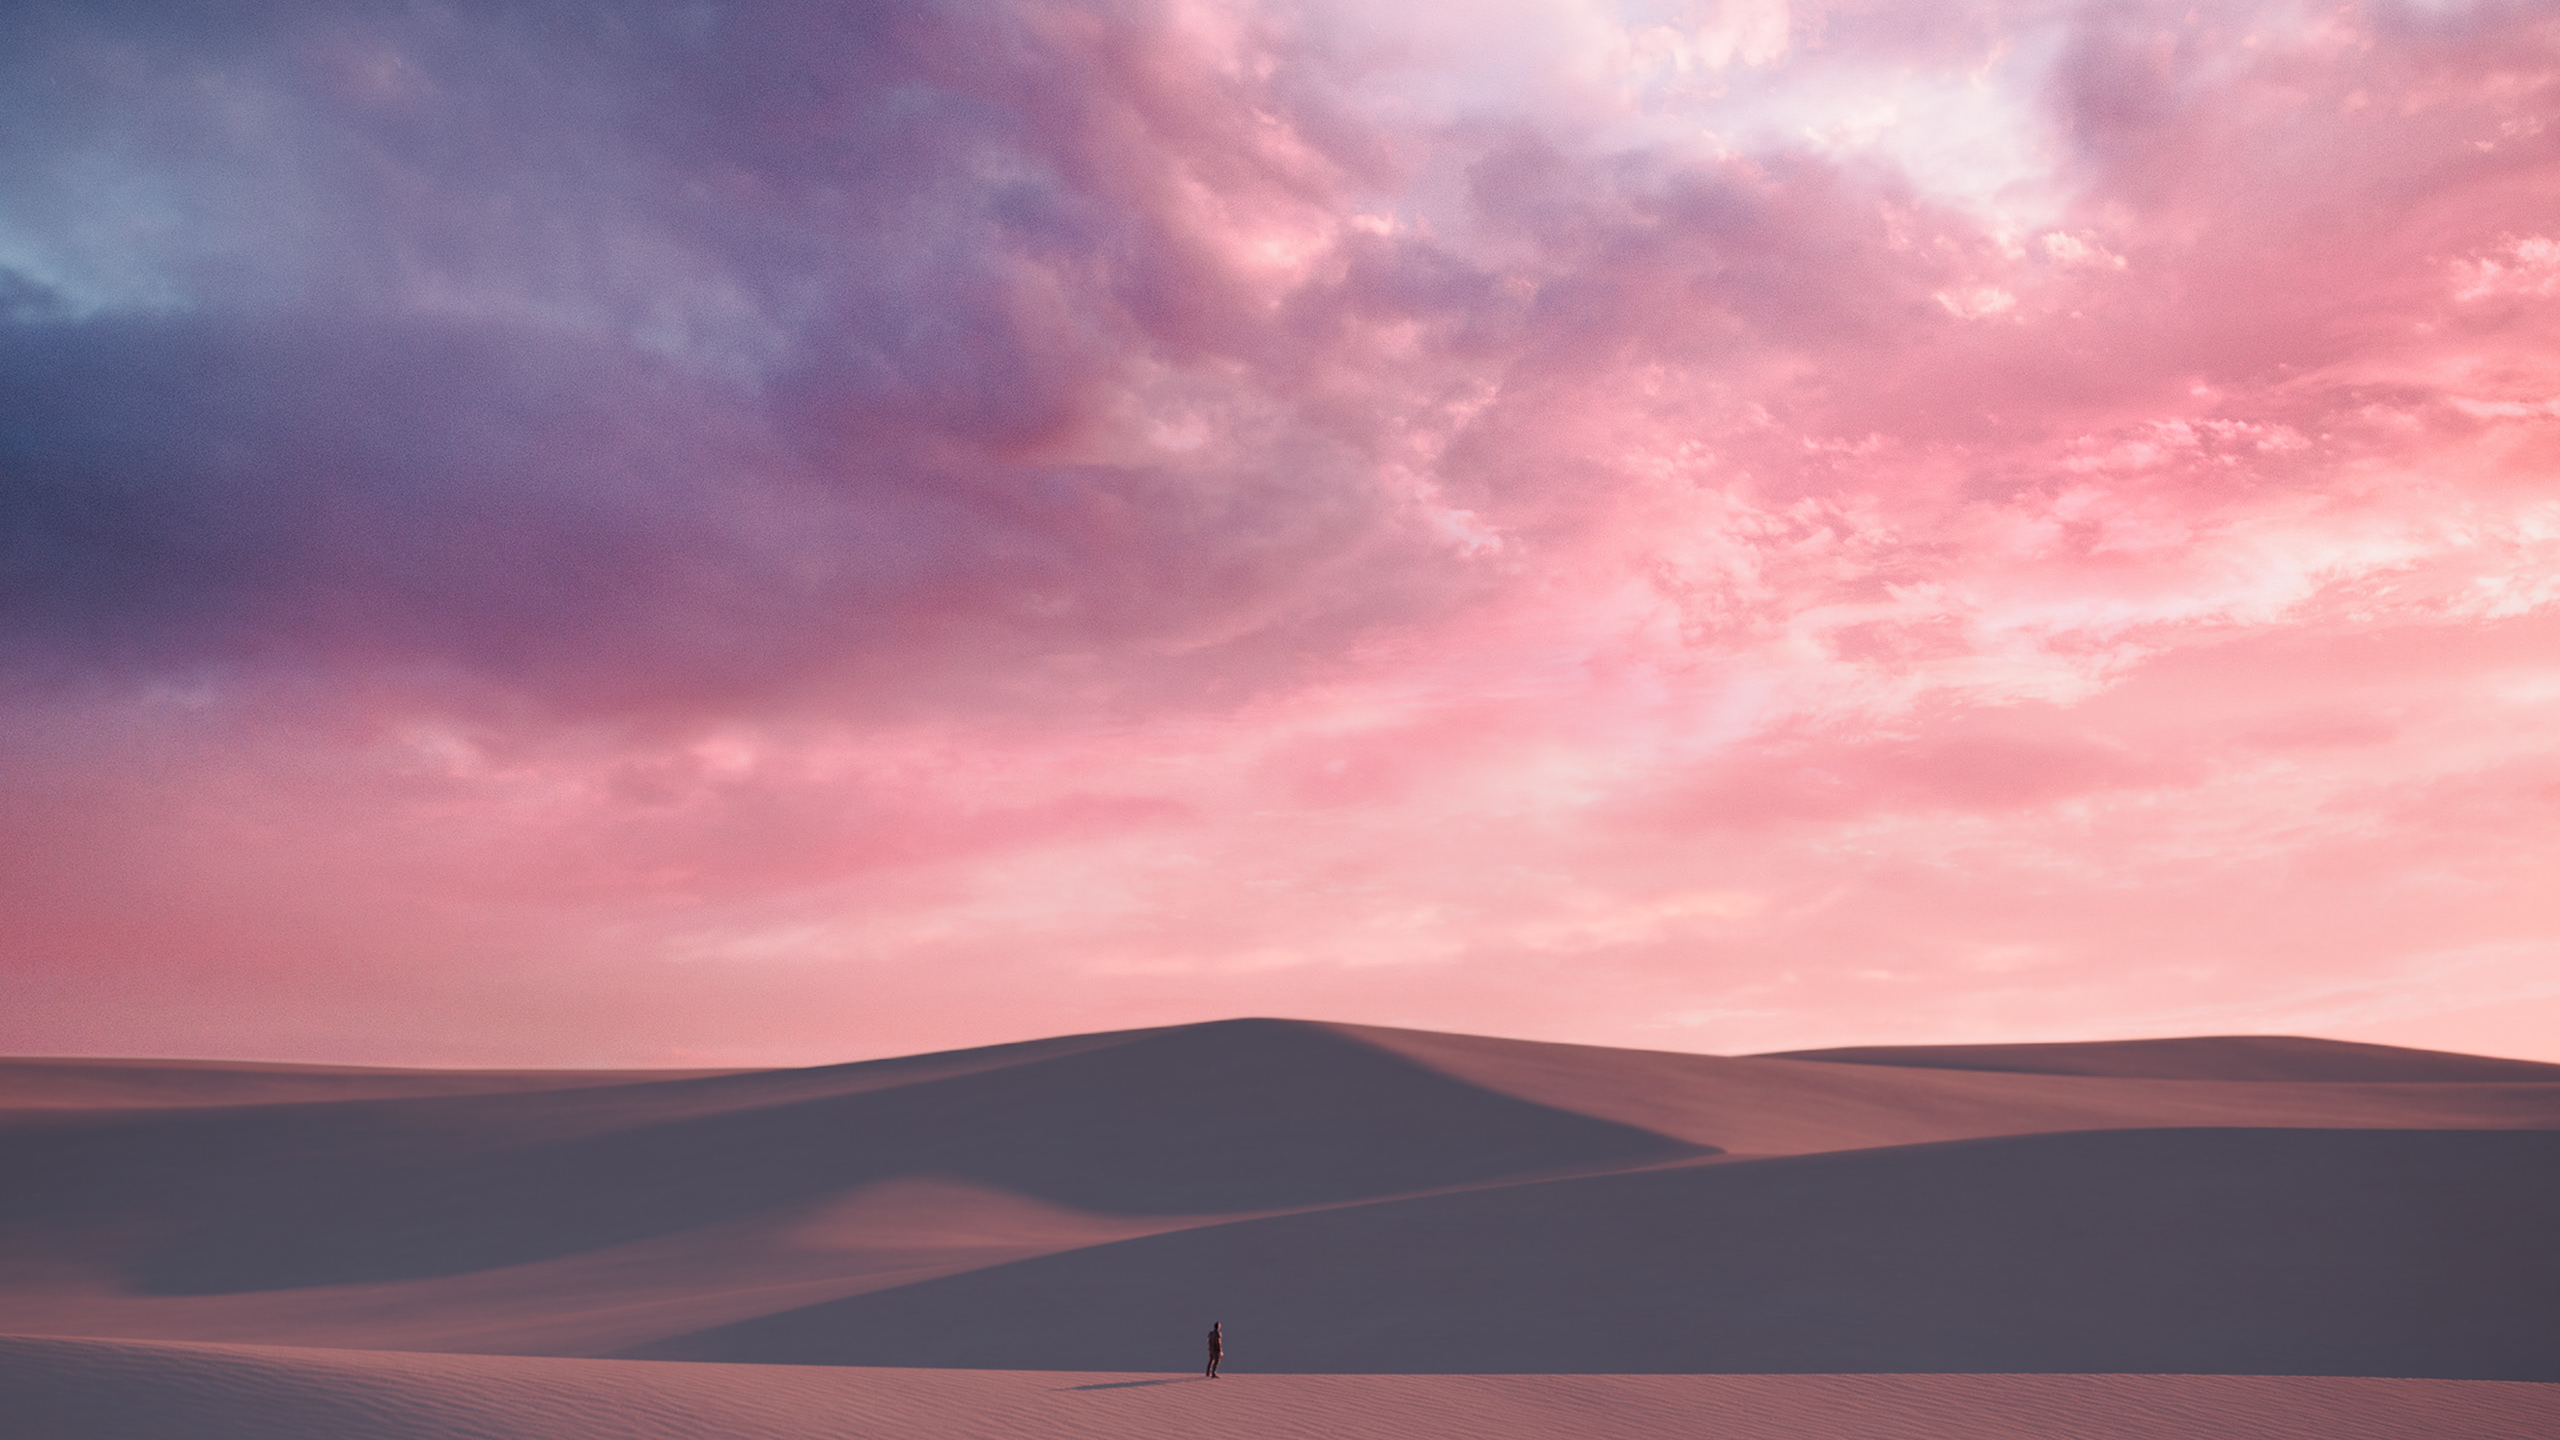 Digital Art Artwork Digital Sky Sand Clouds Landscape Dunes Desert 2560x1440